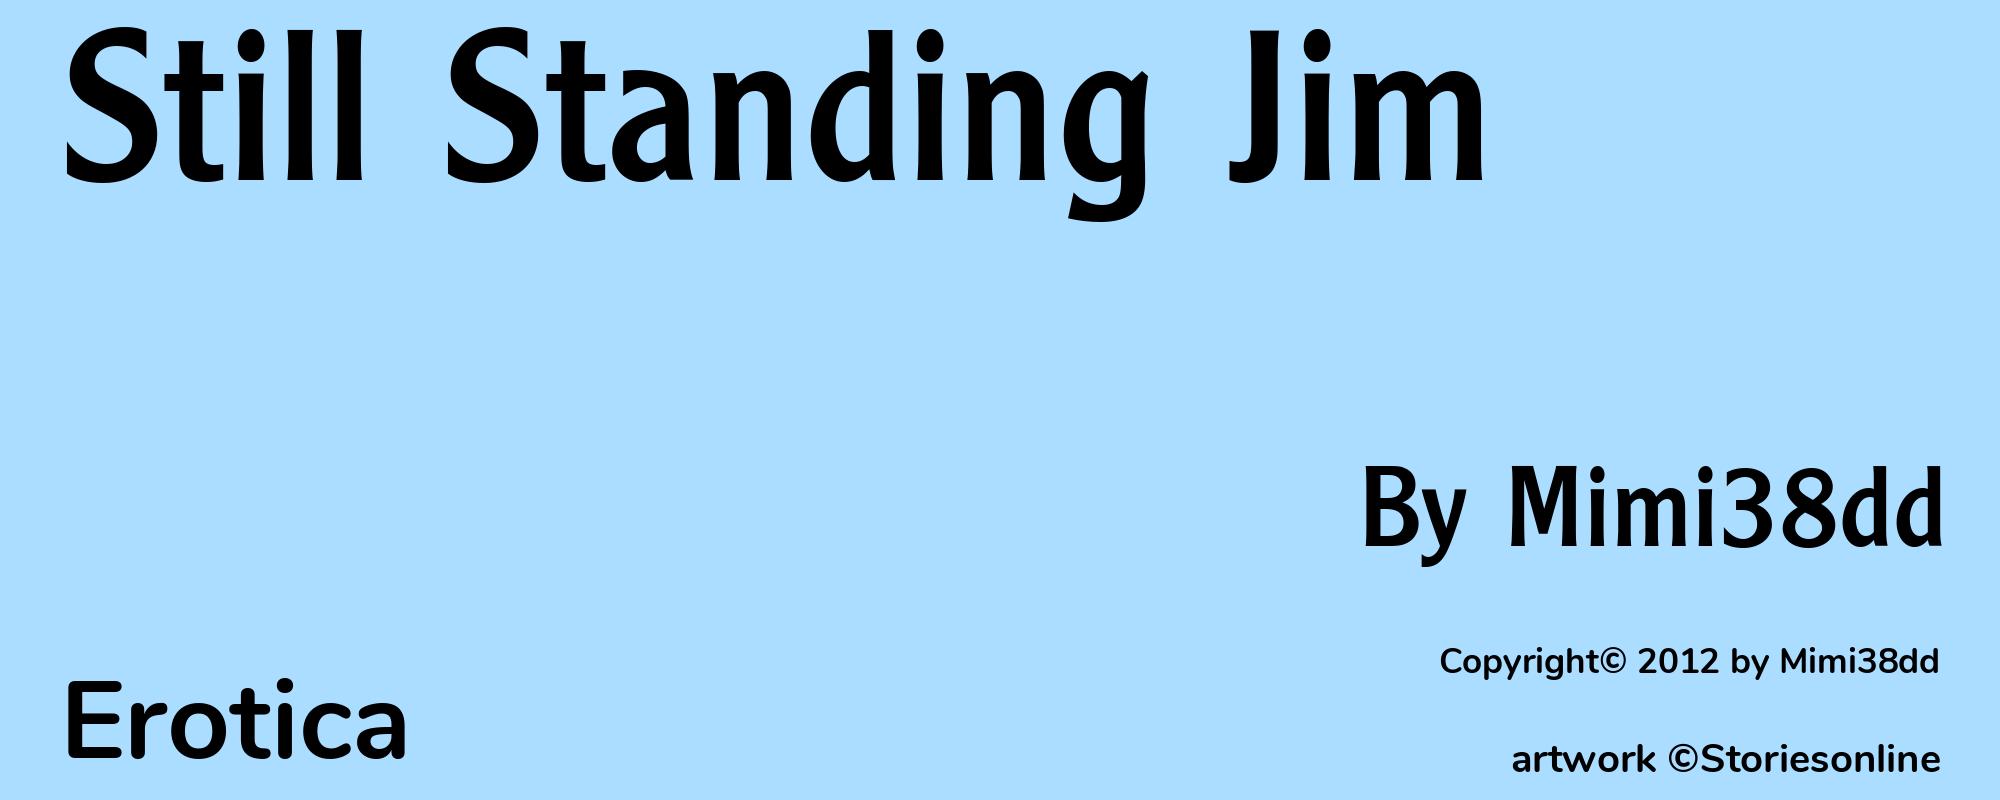 Still Standing Jim - Cover